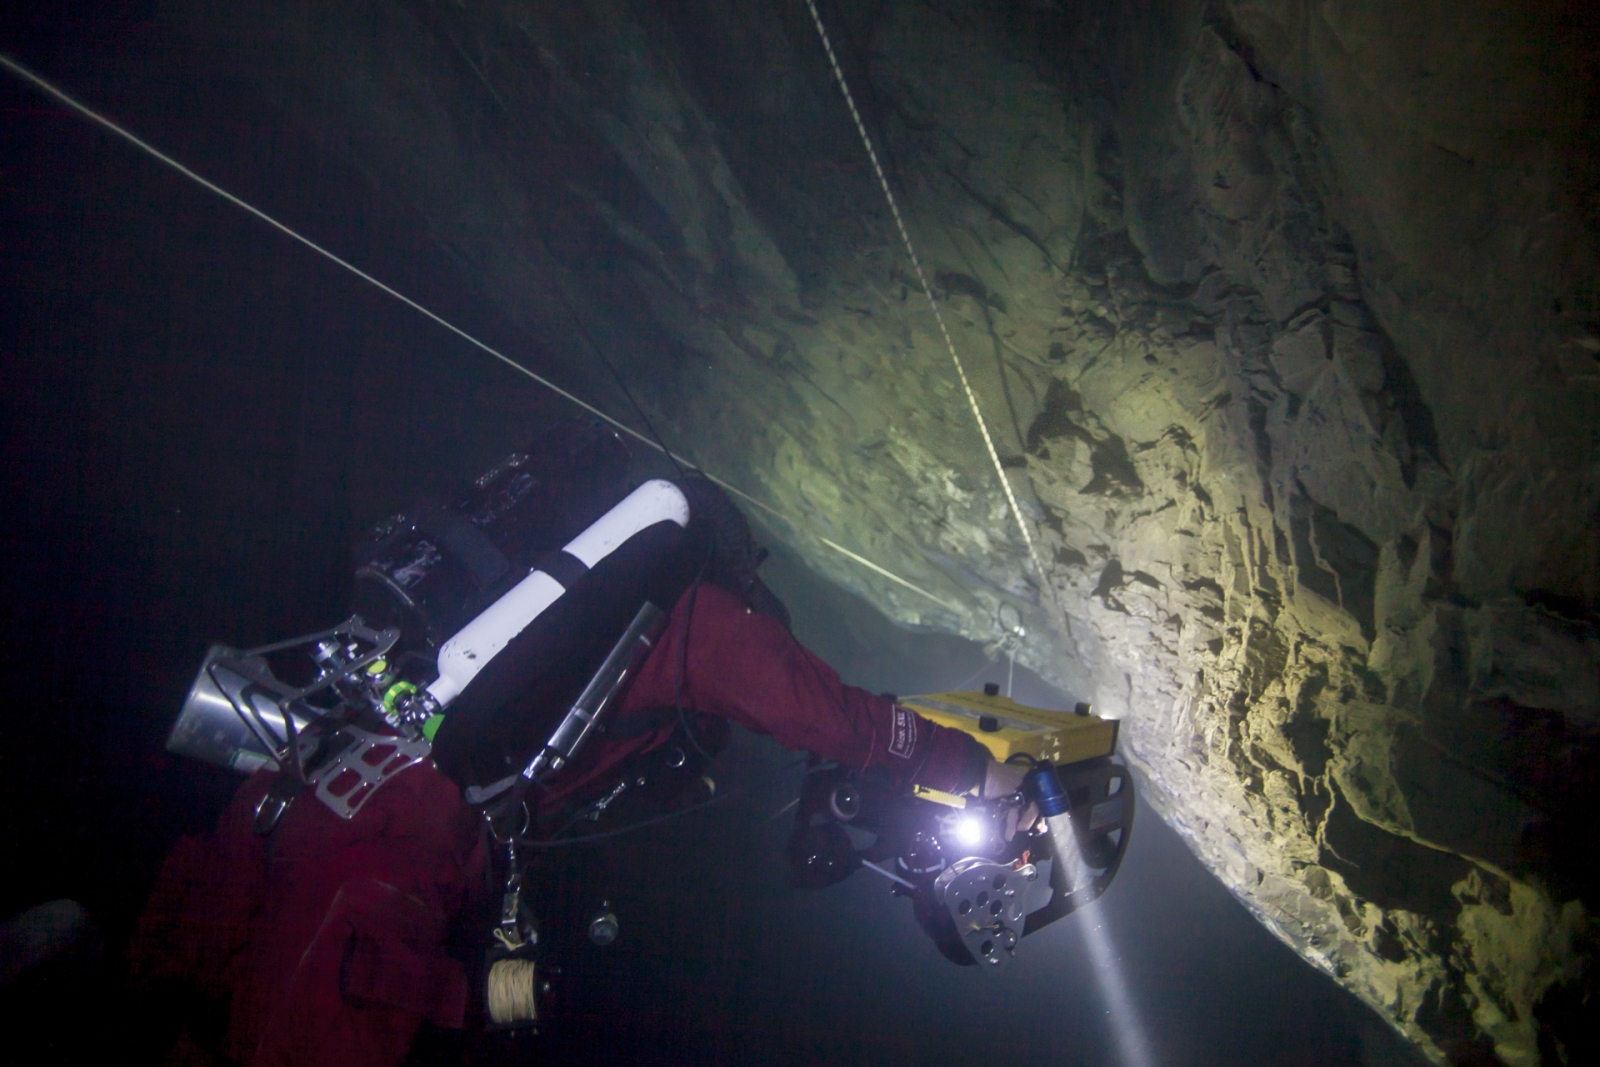 Czech Republic Worlds Deepest Underwater Cave Discovered Reaching 1325 Feet